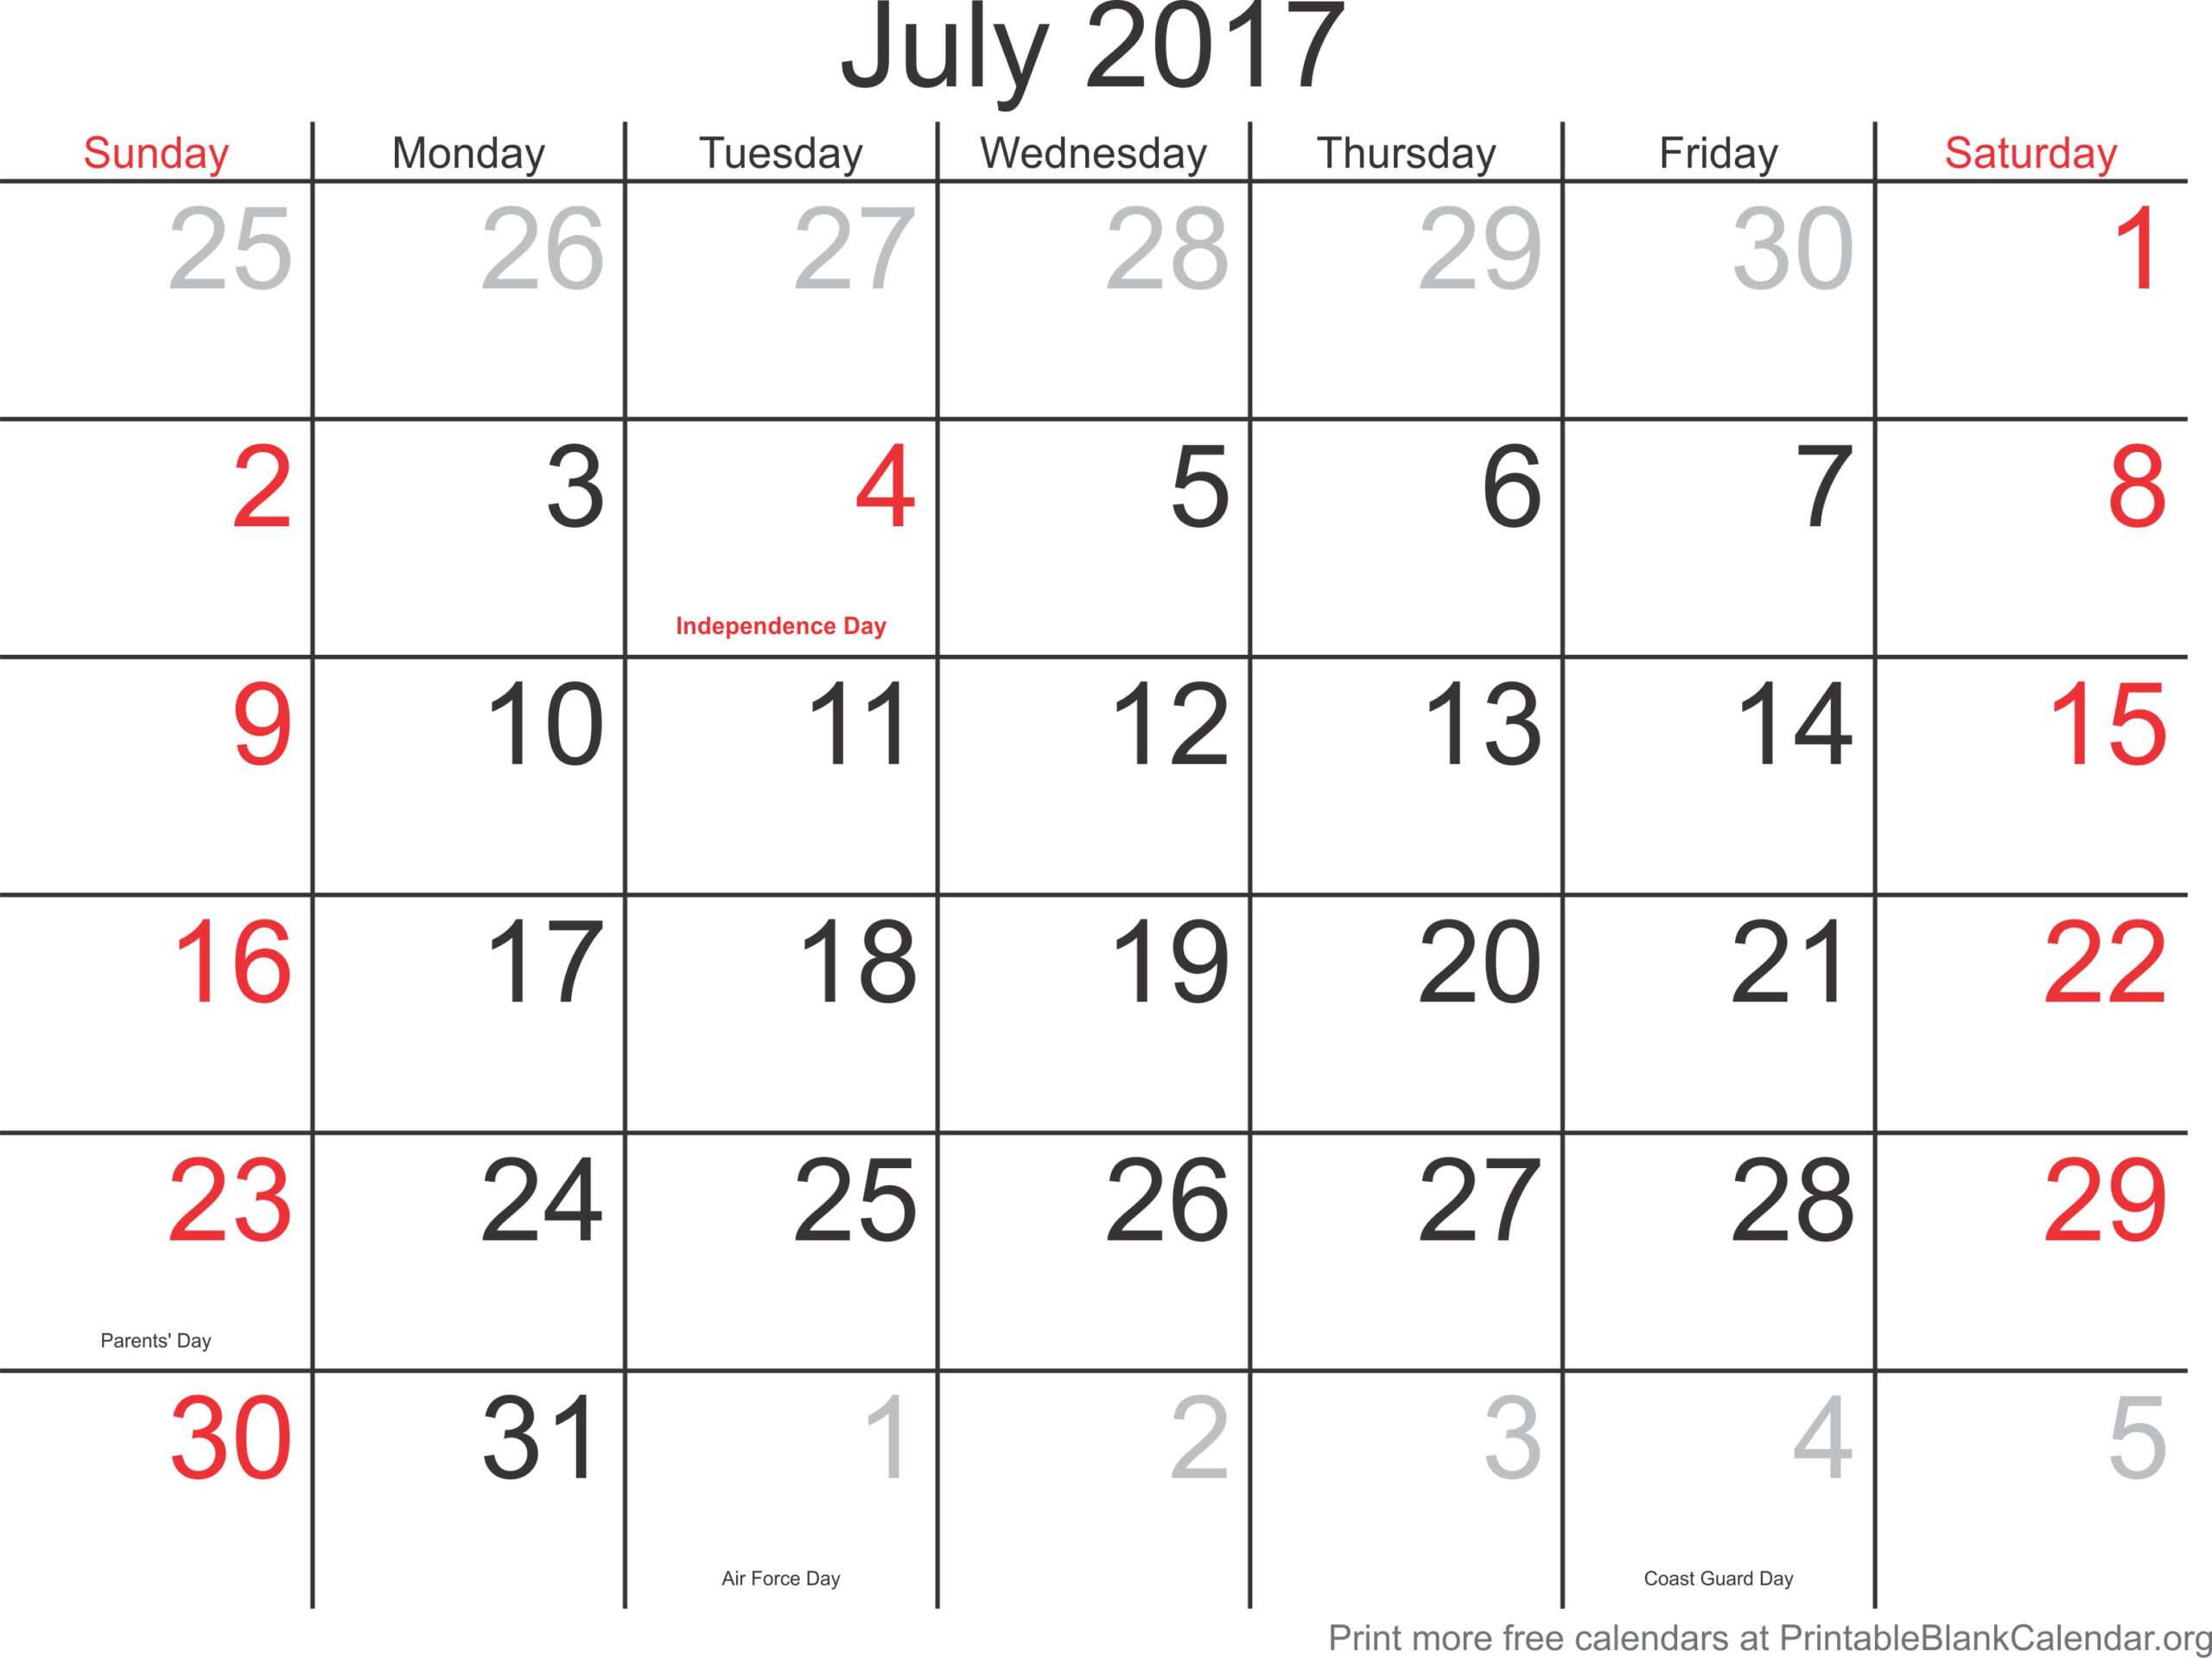 July 2017 Printable Calendar - Printable Blank Calendar